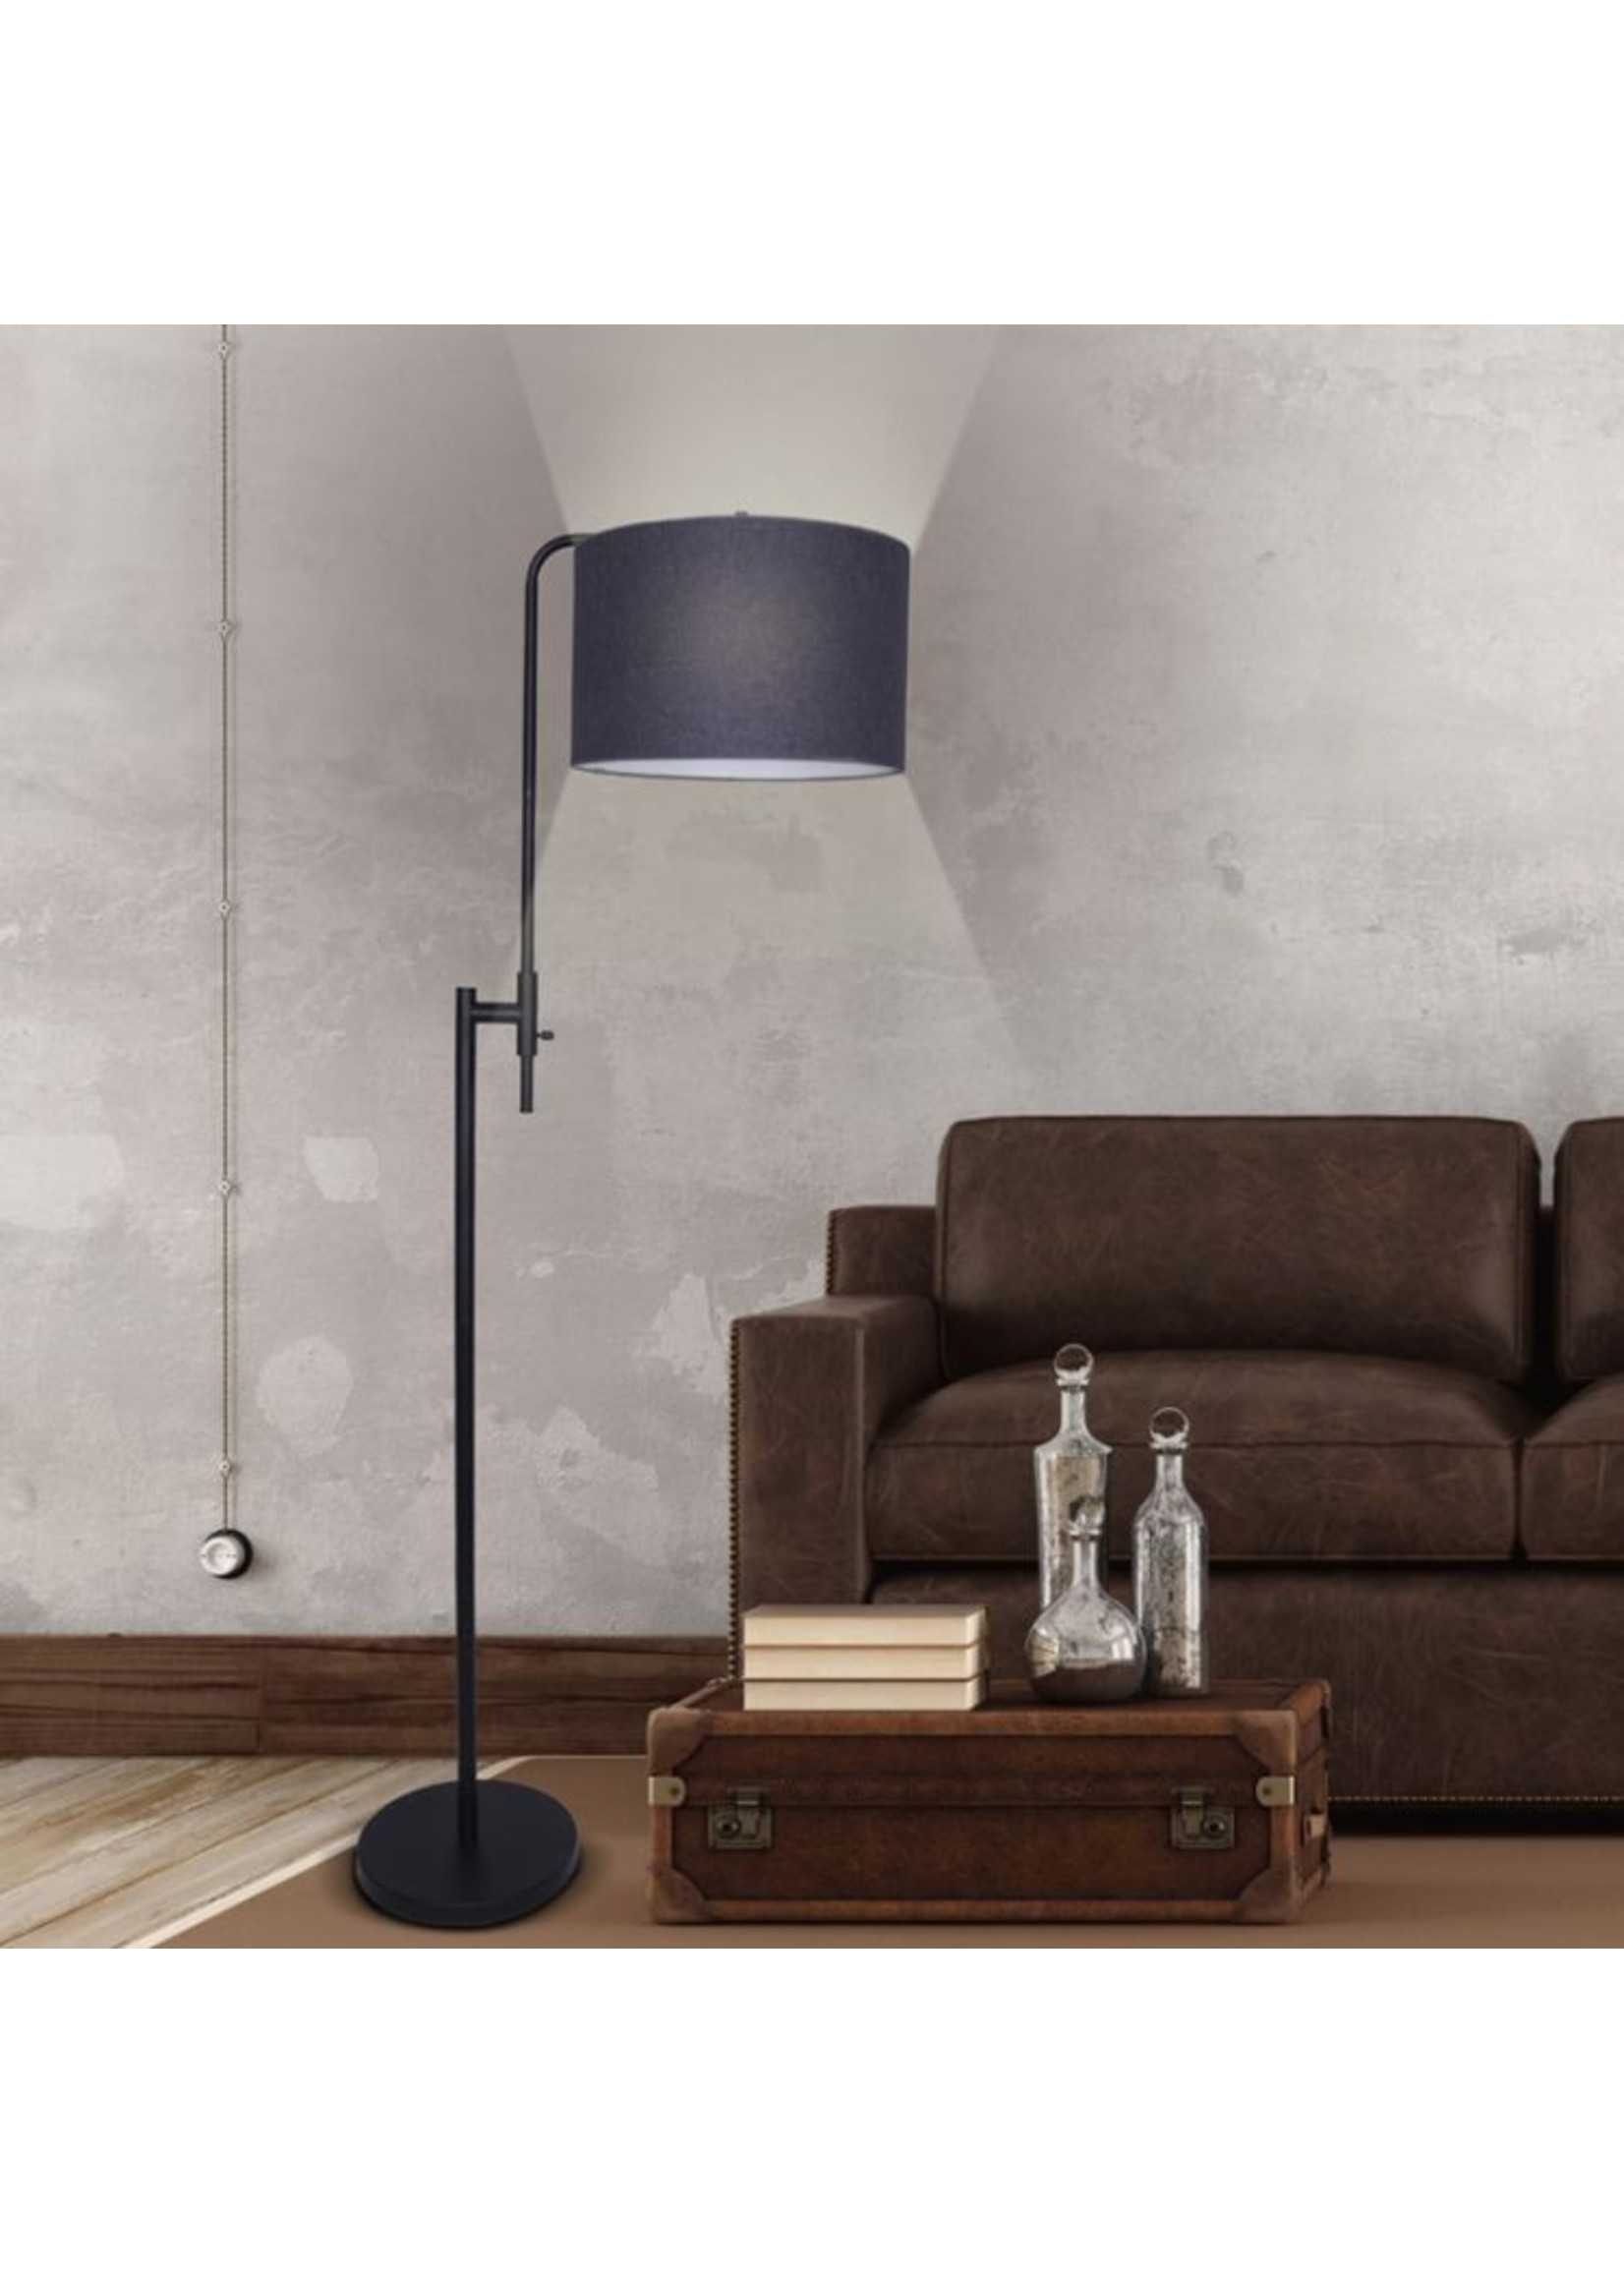 Metal Adjustable Floor Lamp, Drak Grey Shade